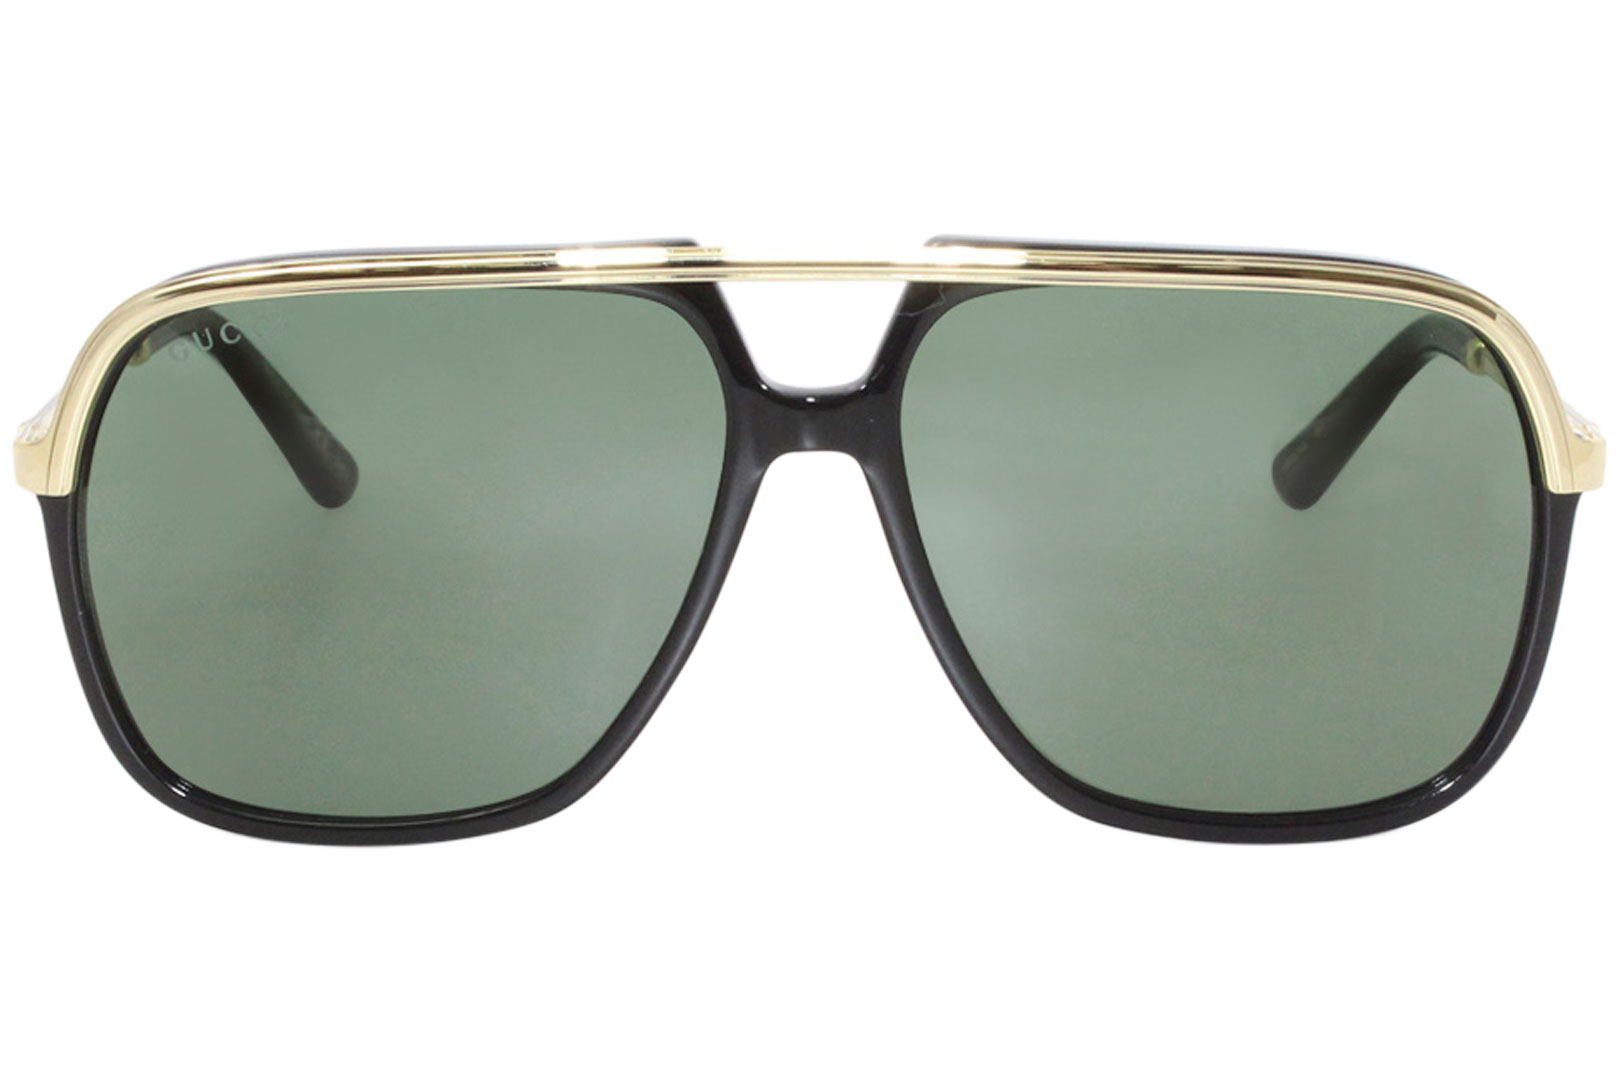 Gucci GG0200S 001 Sunglasses Men's Black-Gold/Green Lenses Pilot 57mm |  